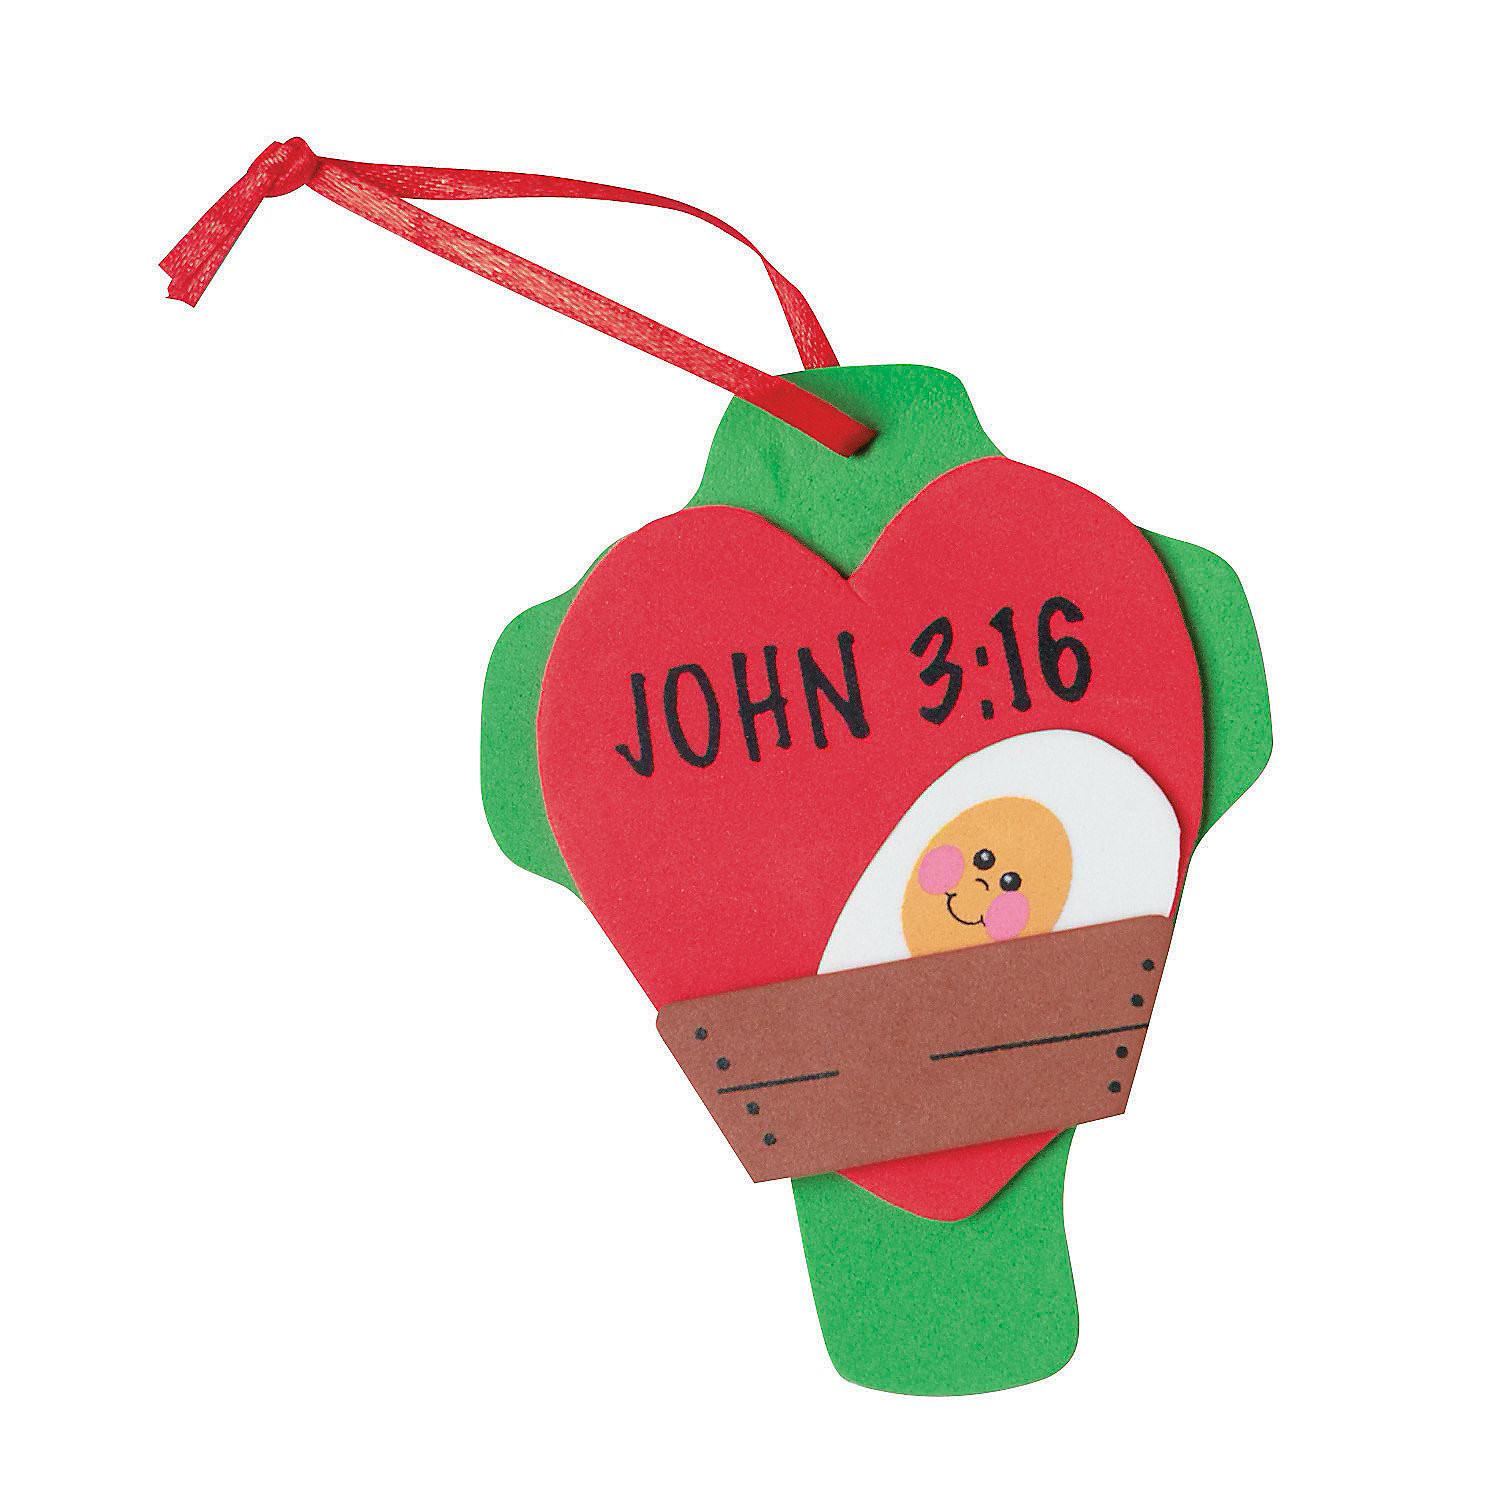 Christian Christmas Crafts For Kids
 “John 3 16” Christmas Ornament Craft Kit Oriental Trading